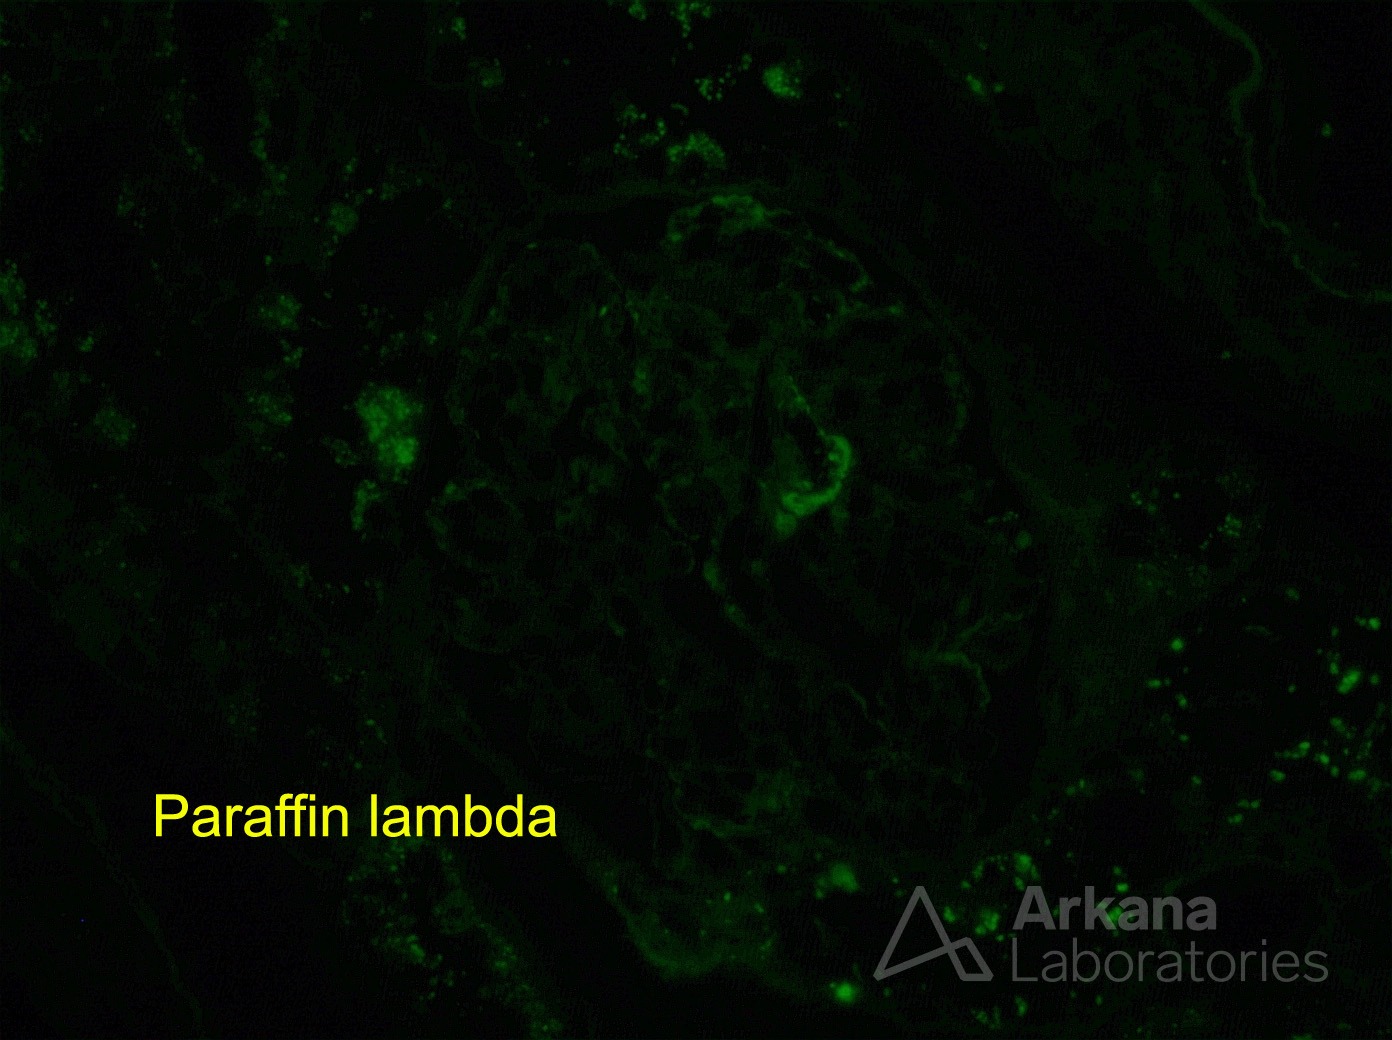 paraffin lambda renal biopsy stain, Monoclonal gammopathy of renal significance